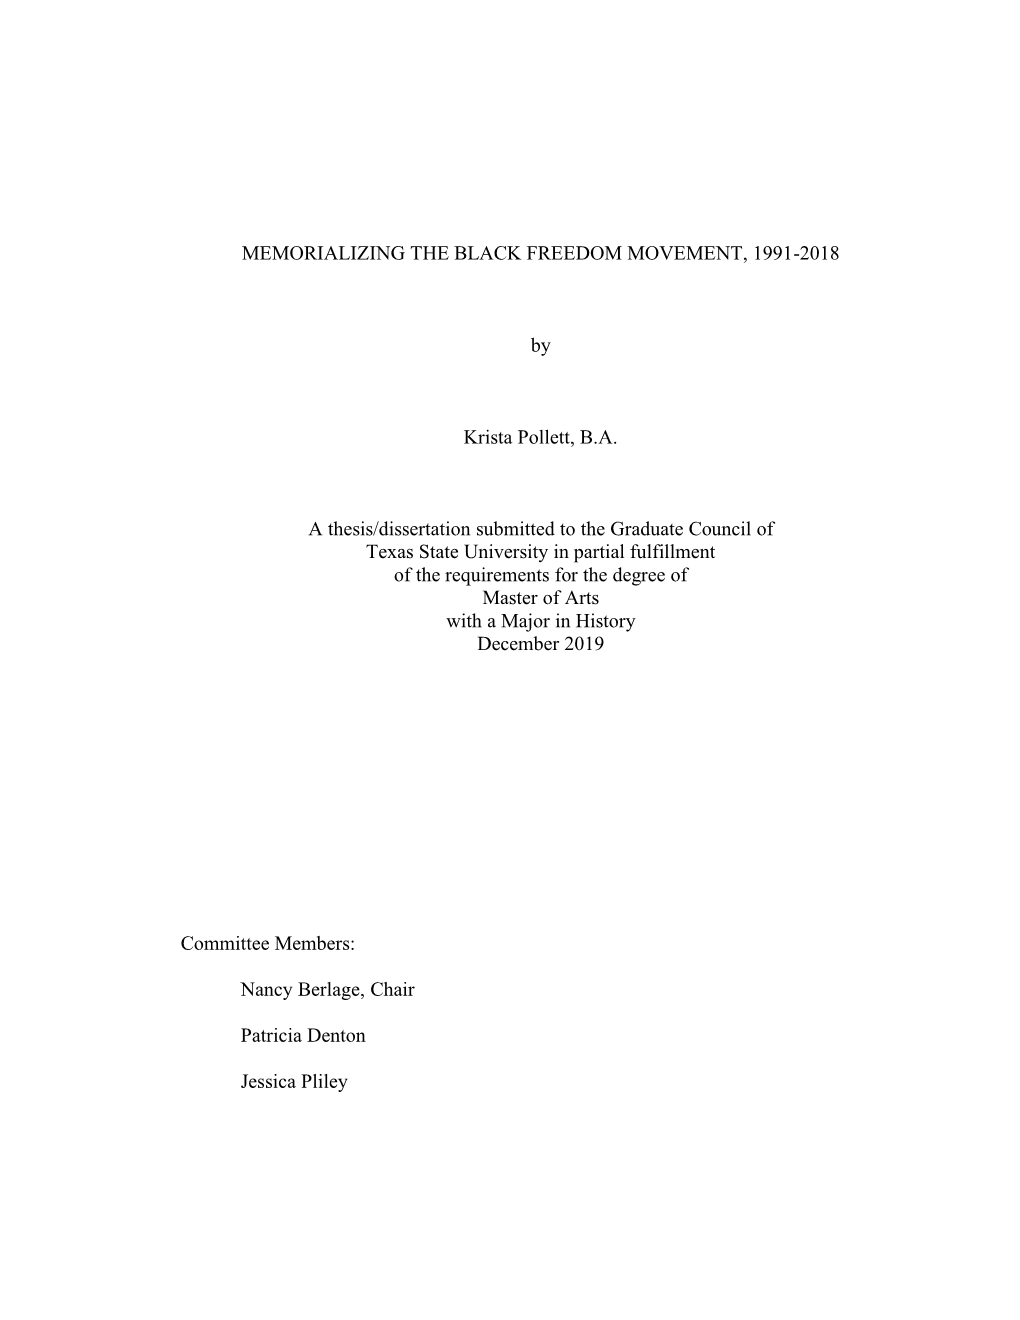 Memorializing the Black Freedom Movement, 1991-2018